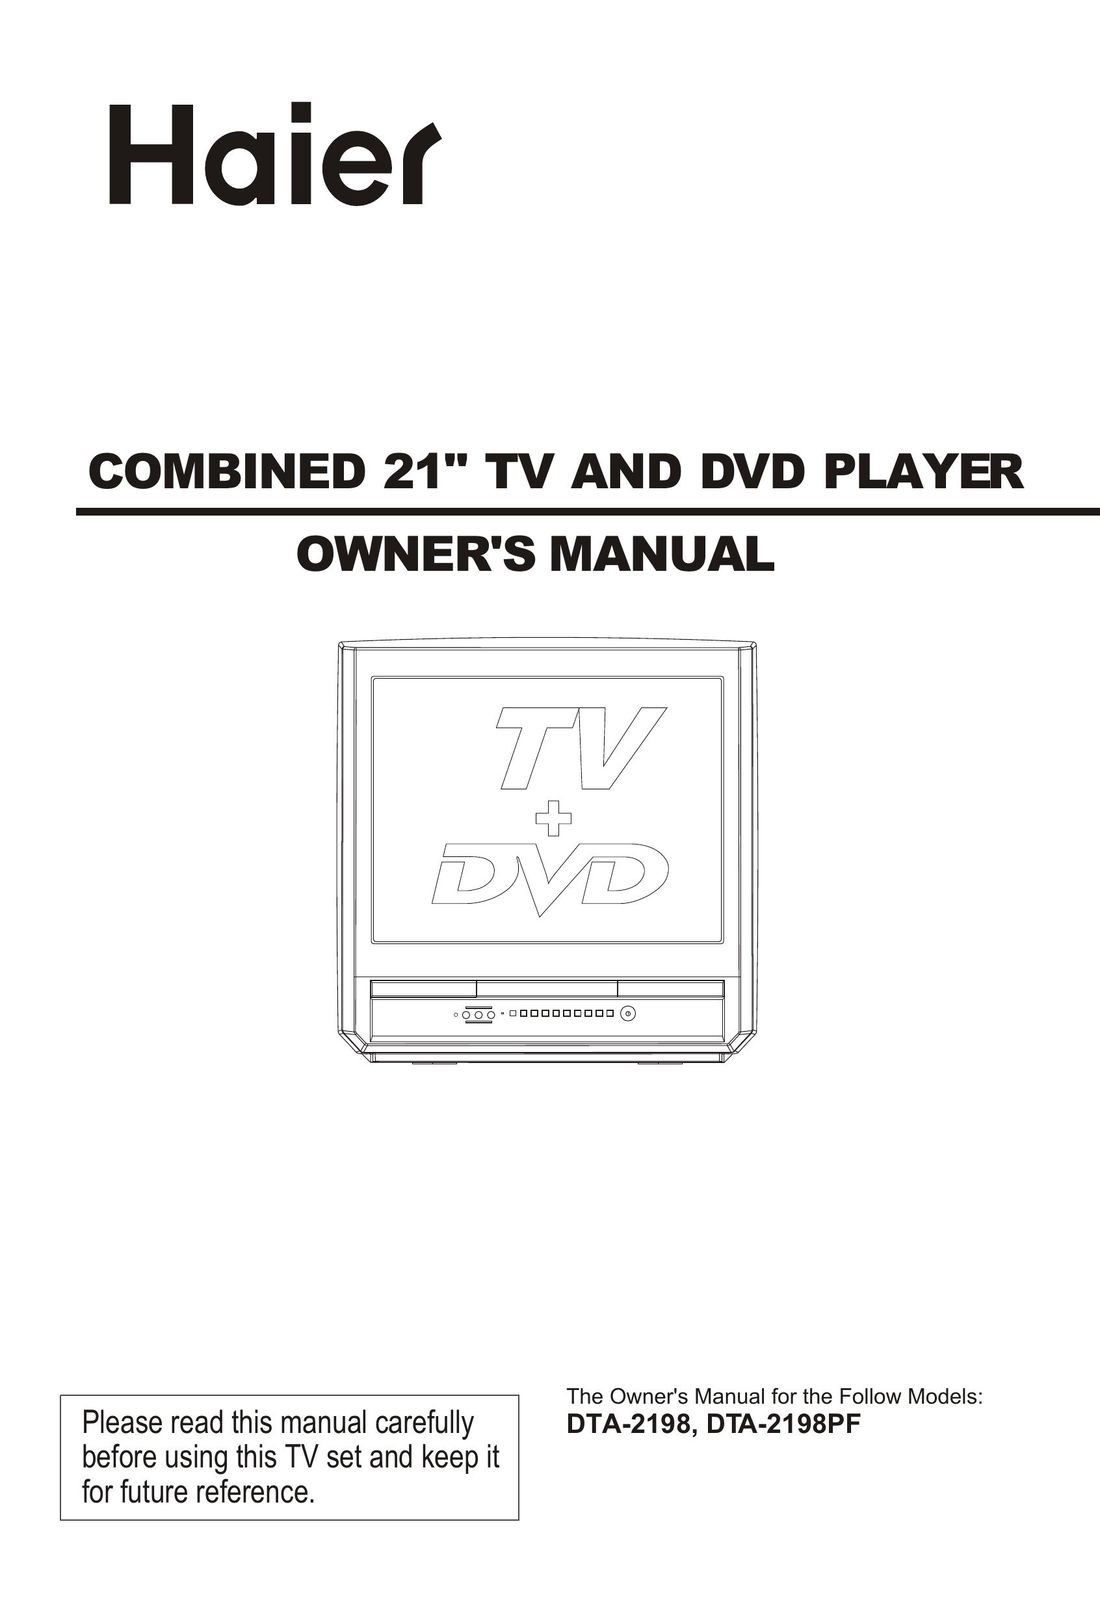 Haier DTA-2198 TV DVD Combo User Manual